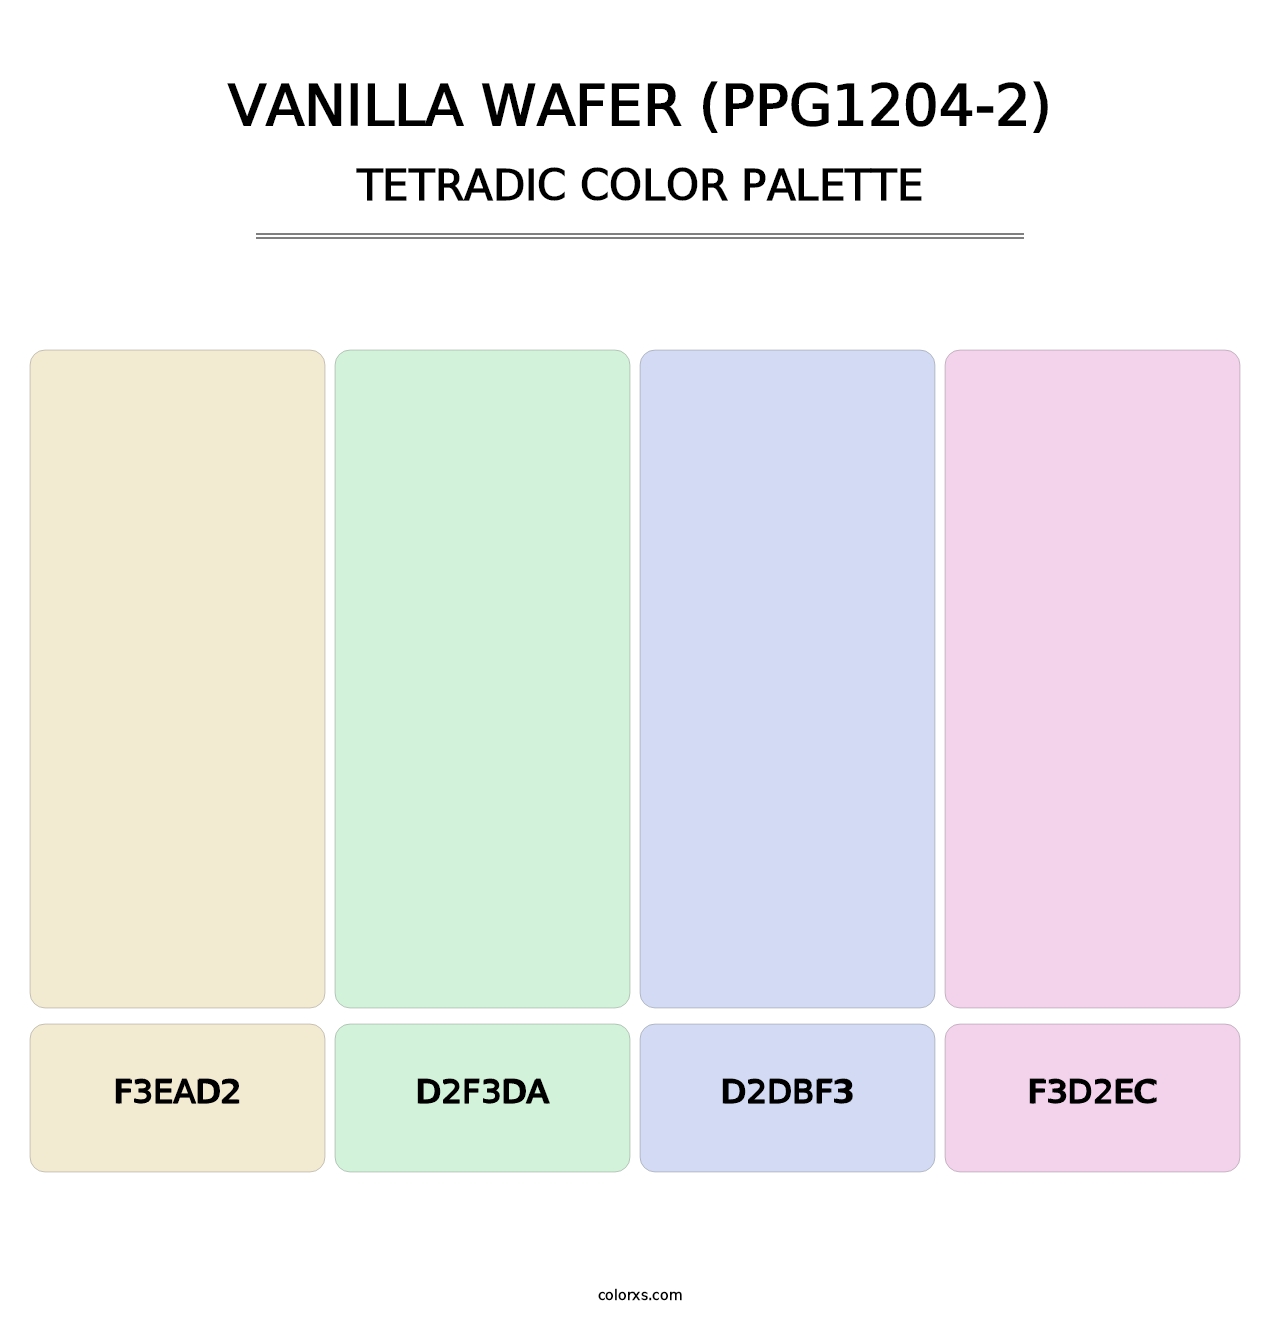 Vanilla Wafer (PPG1204-2) - Tetradic Color Palette